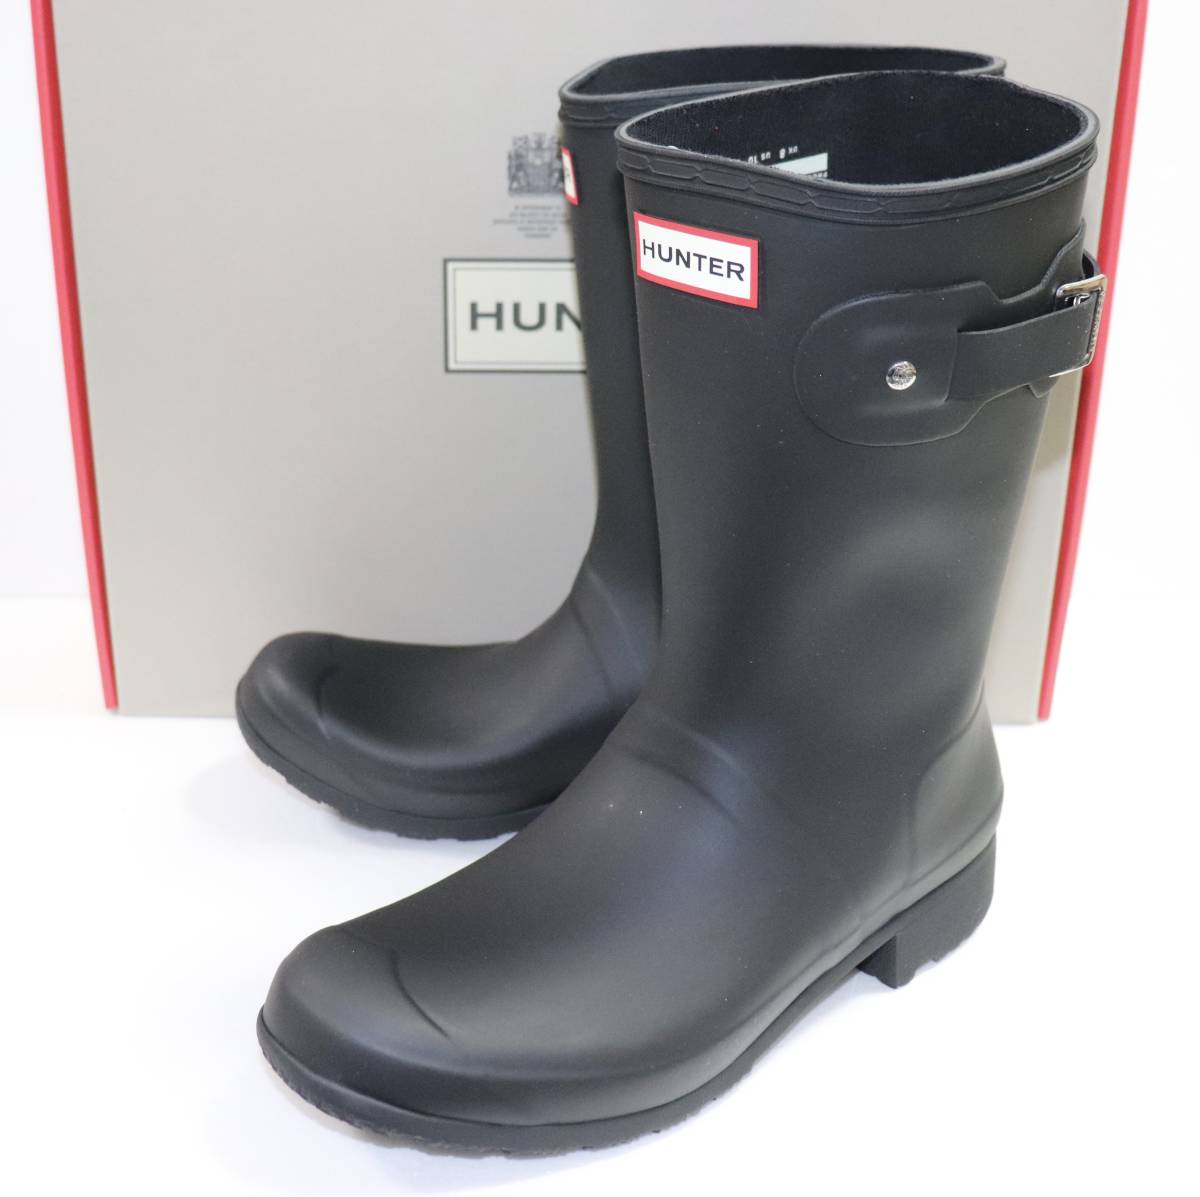  regular price 18150 new goods genuine article HUNTER WFS1026RMA ORIGINAL TOUR SHORT Short rain boots Hunter JP28 US11 UK9 EU43 FS365